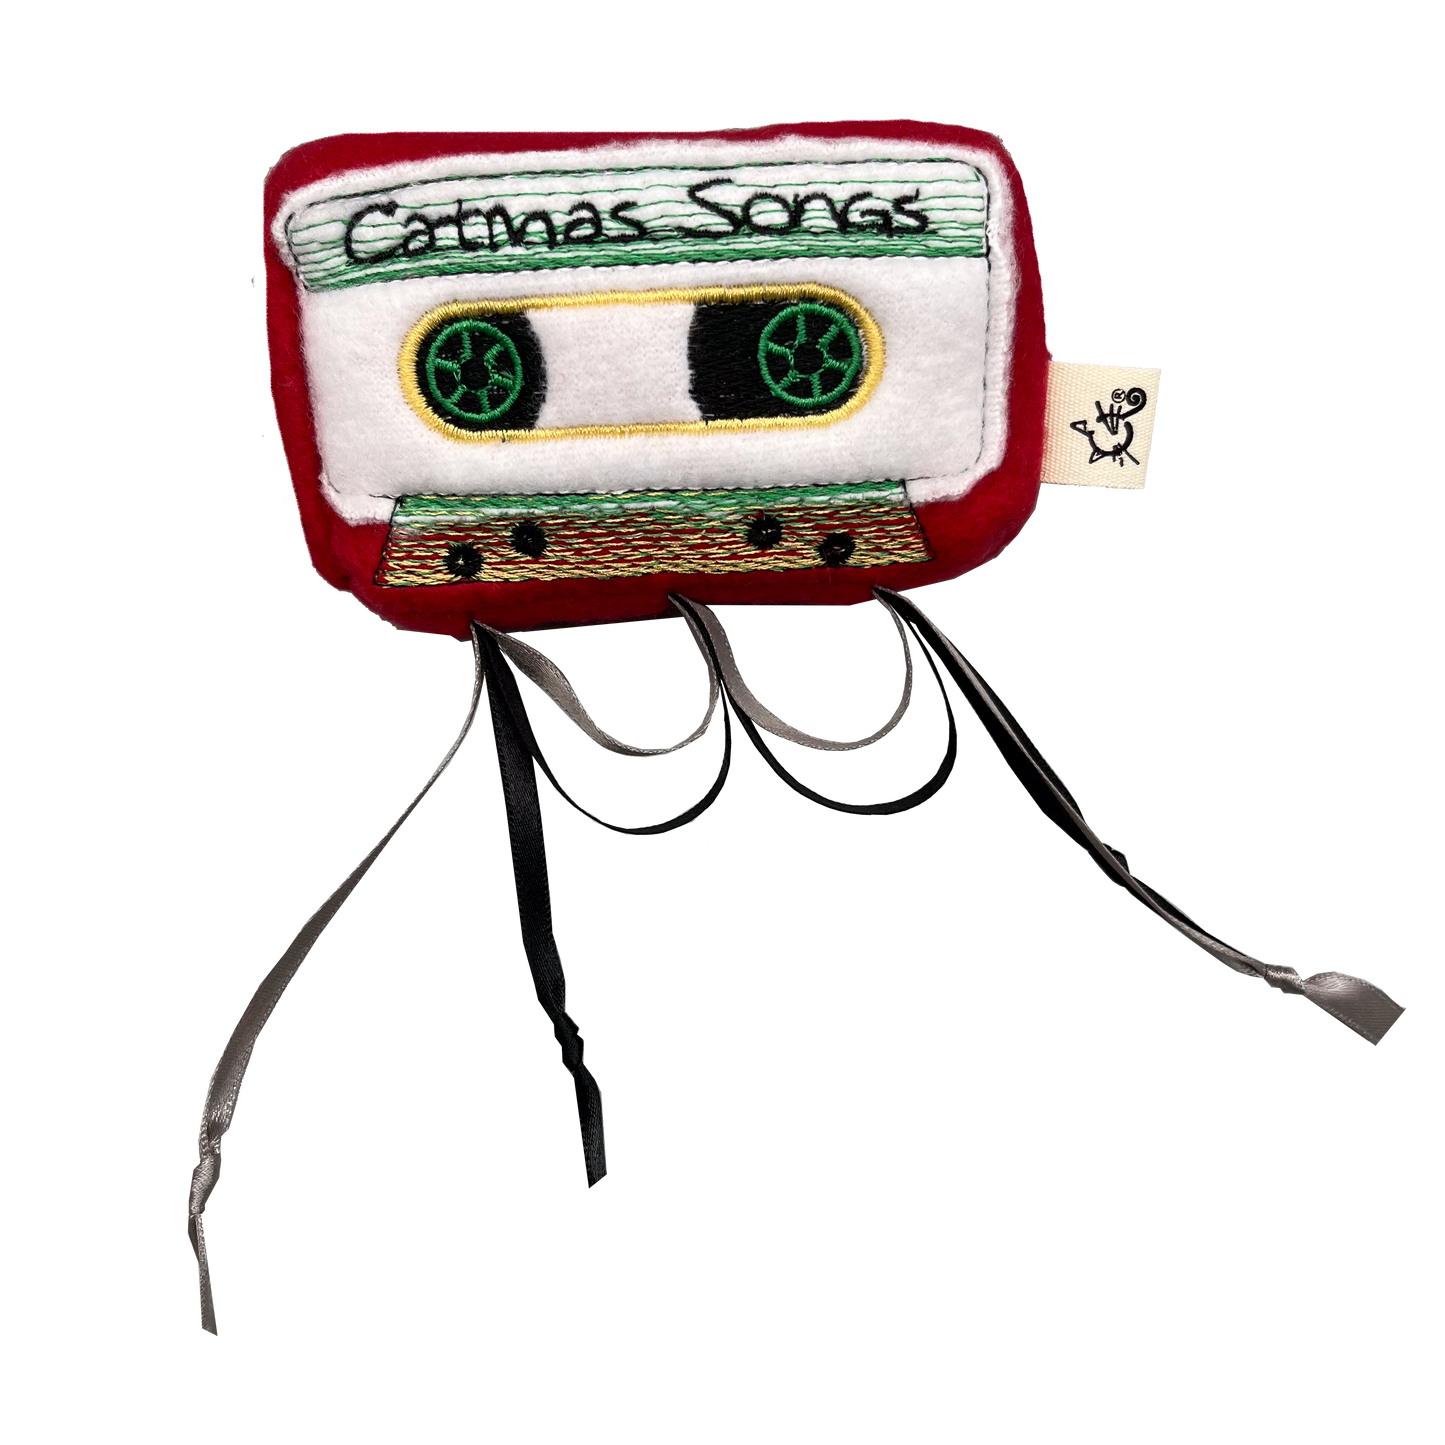 Catmas Songs Eaten Cassette Tape Cat Toy